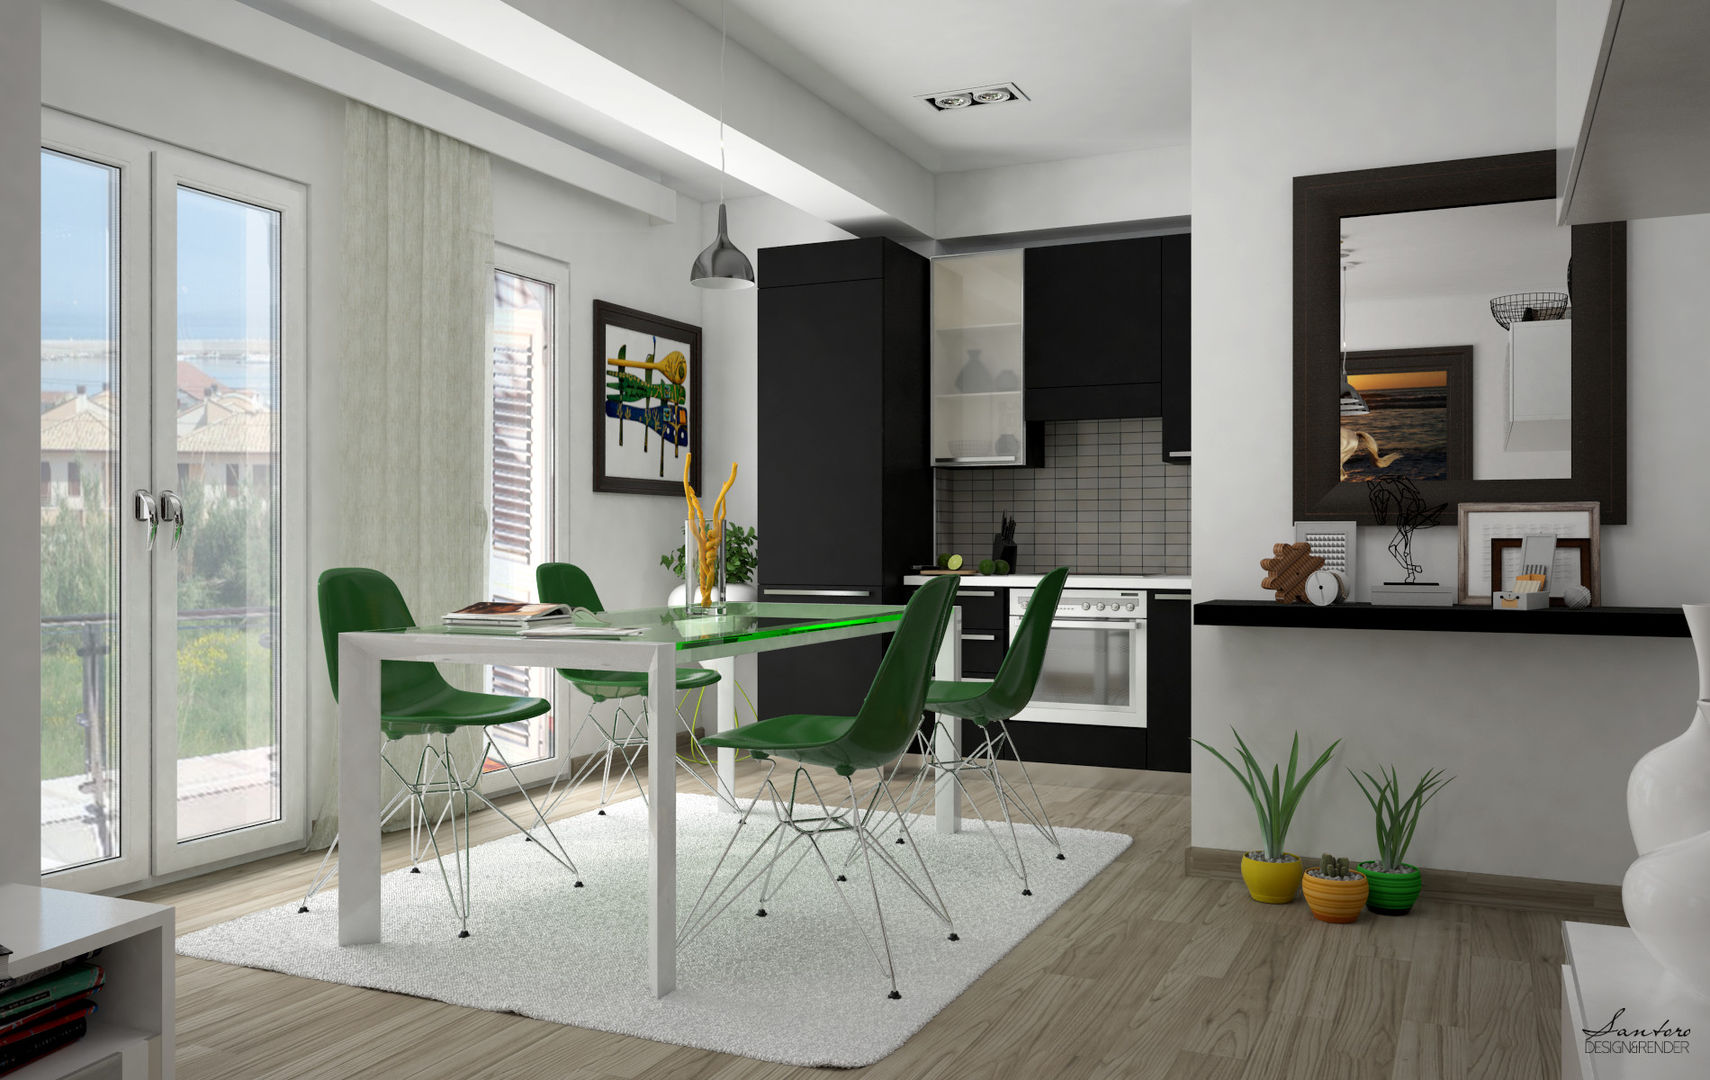 Design & Render livingroom – arredamento S.Agata Militello (ME) , Santoro Design Render Santoro Design Render Moderne keukens